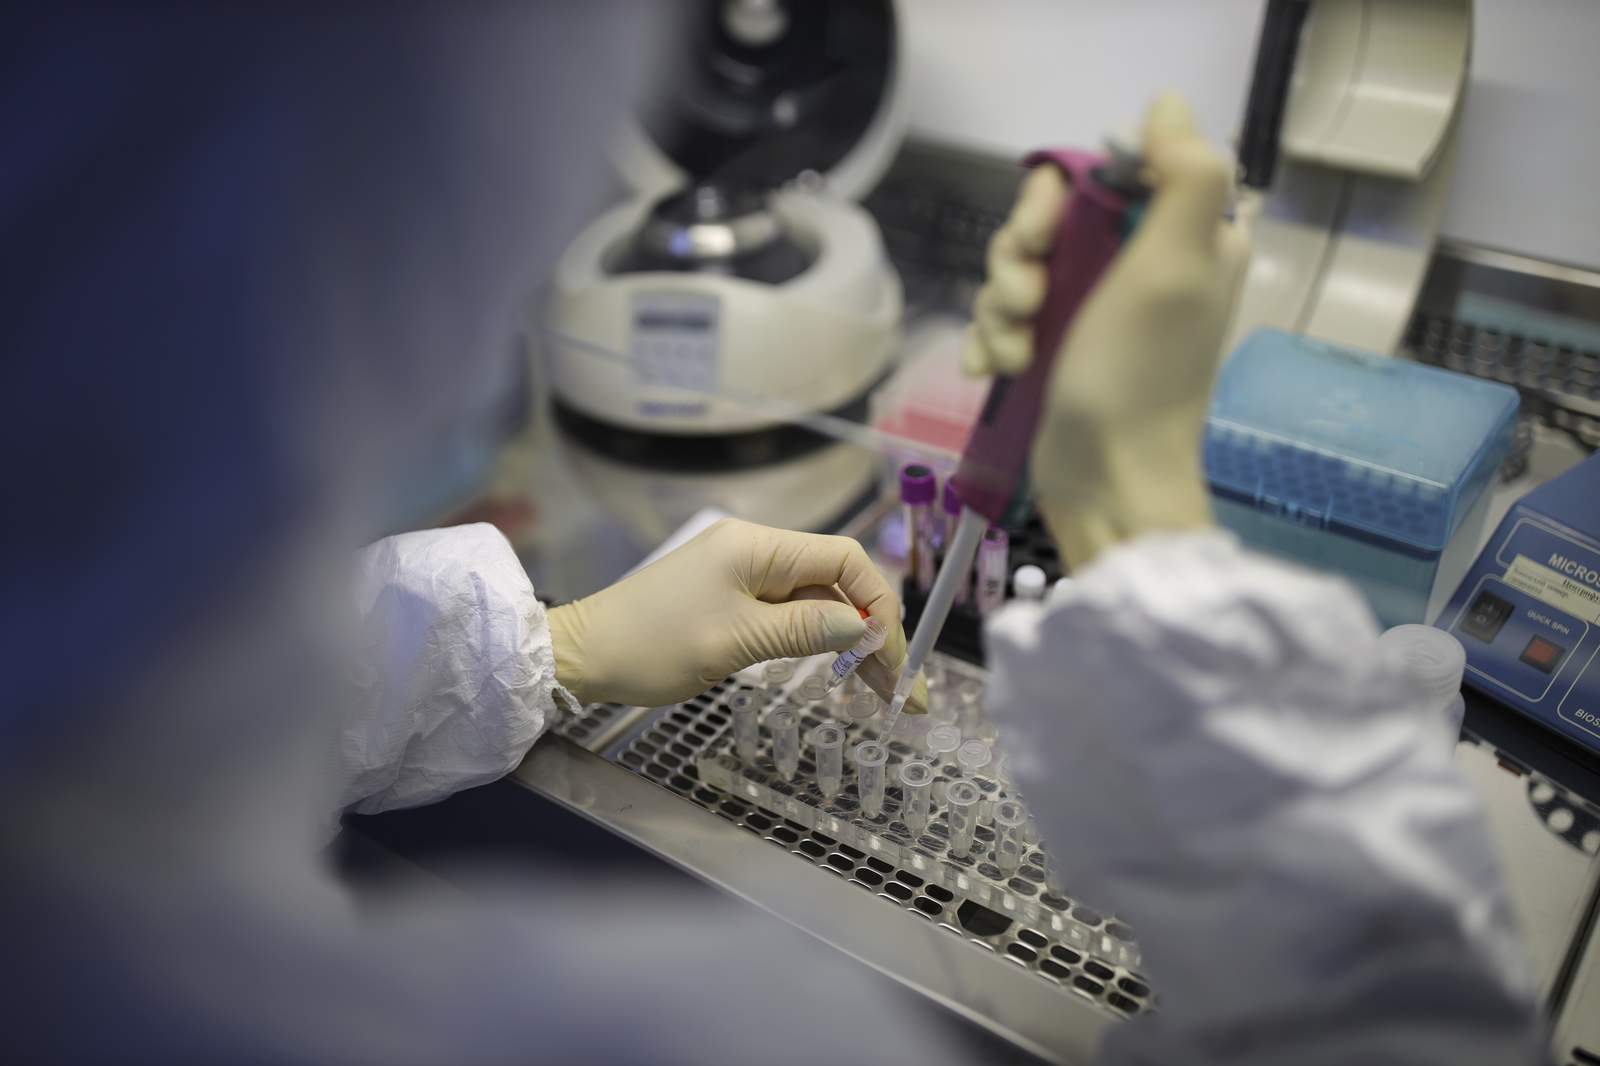 Houston Health Department now doing lab testing for suspected coronavirus cases